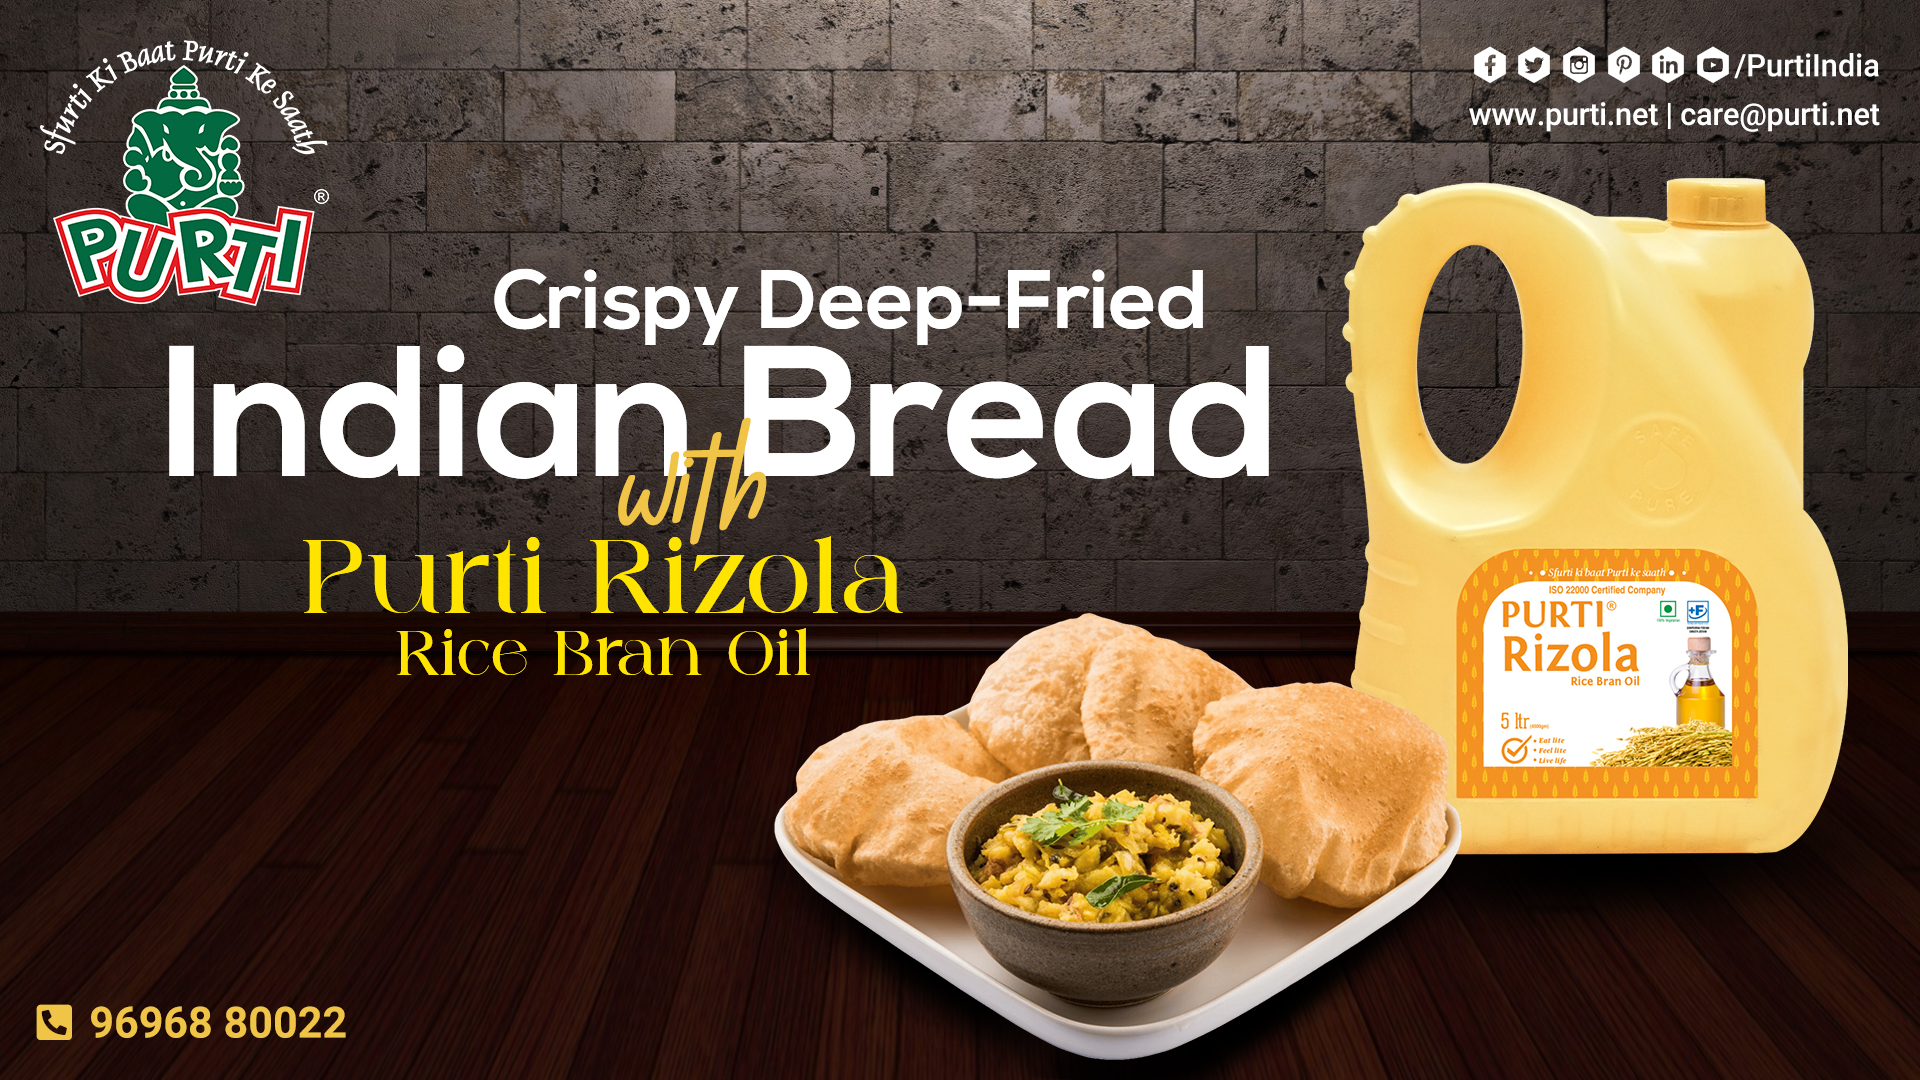 Homemade Puri Recipe: Crispy Deep-Fried Indian Bread with Purti Rizola Rice Bran Oil